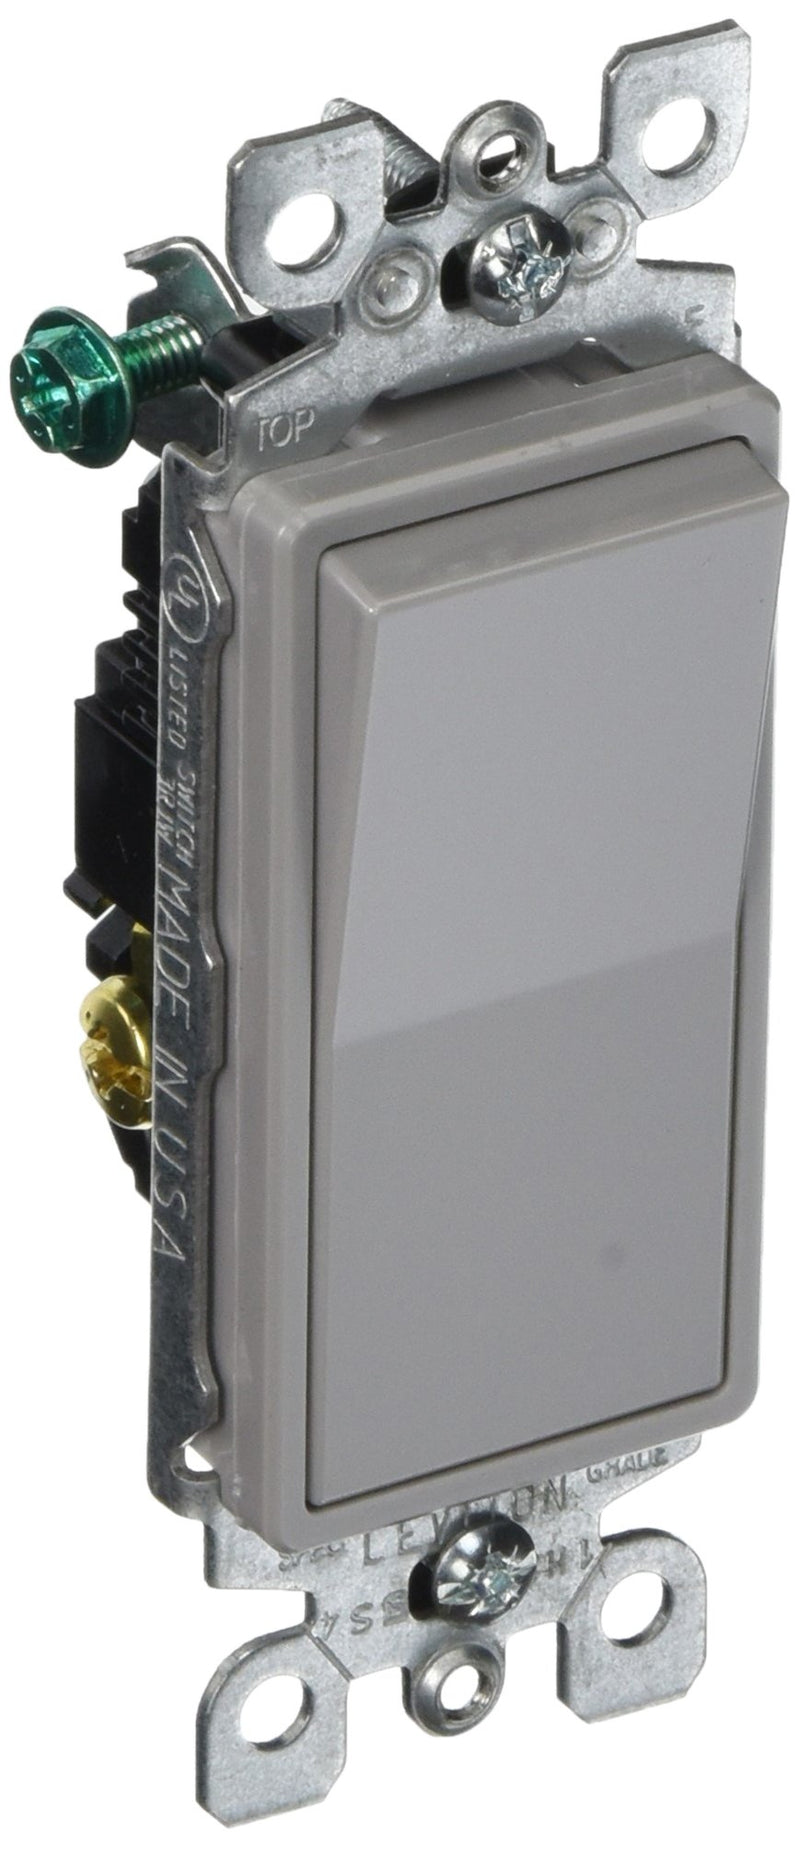 Leviton 5603-2GY 120/277 Volt 15 Amp 3-Way Residential Grade Rocker AC Quiet Switch Gray Decora